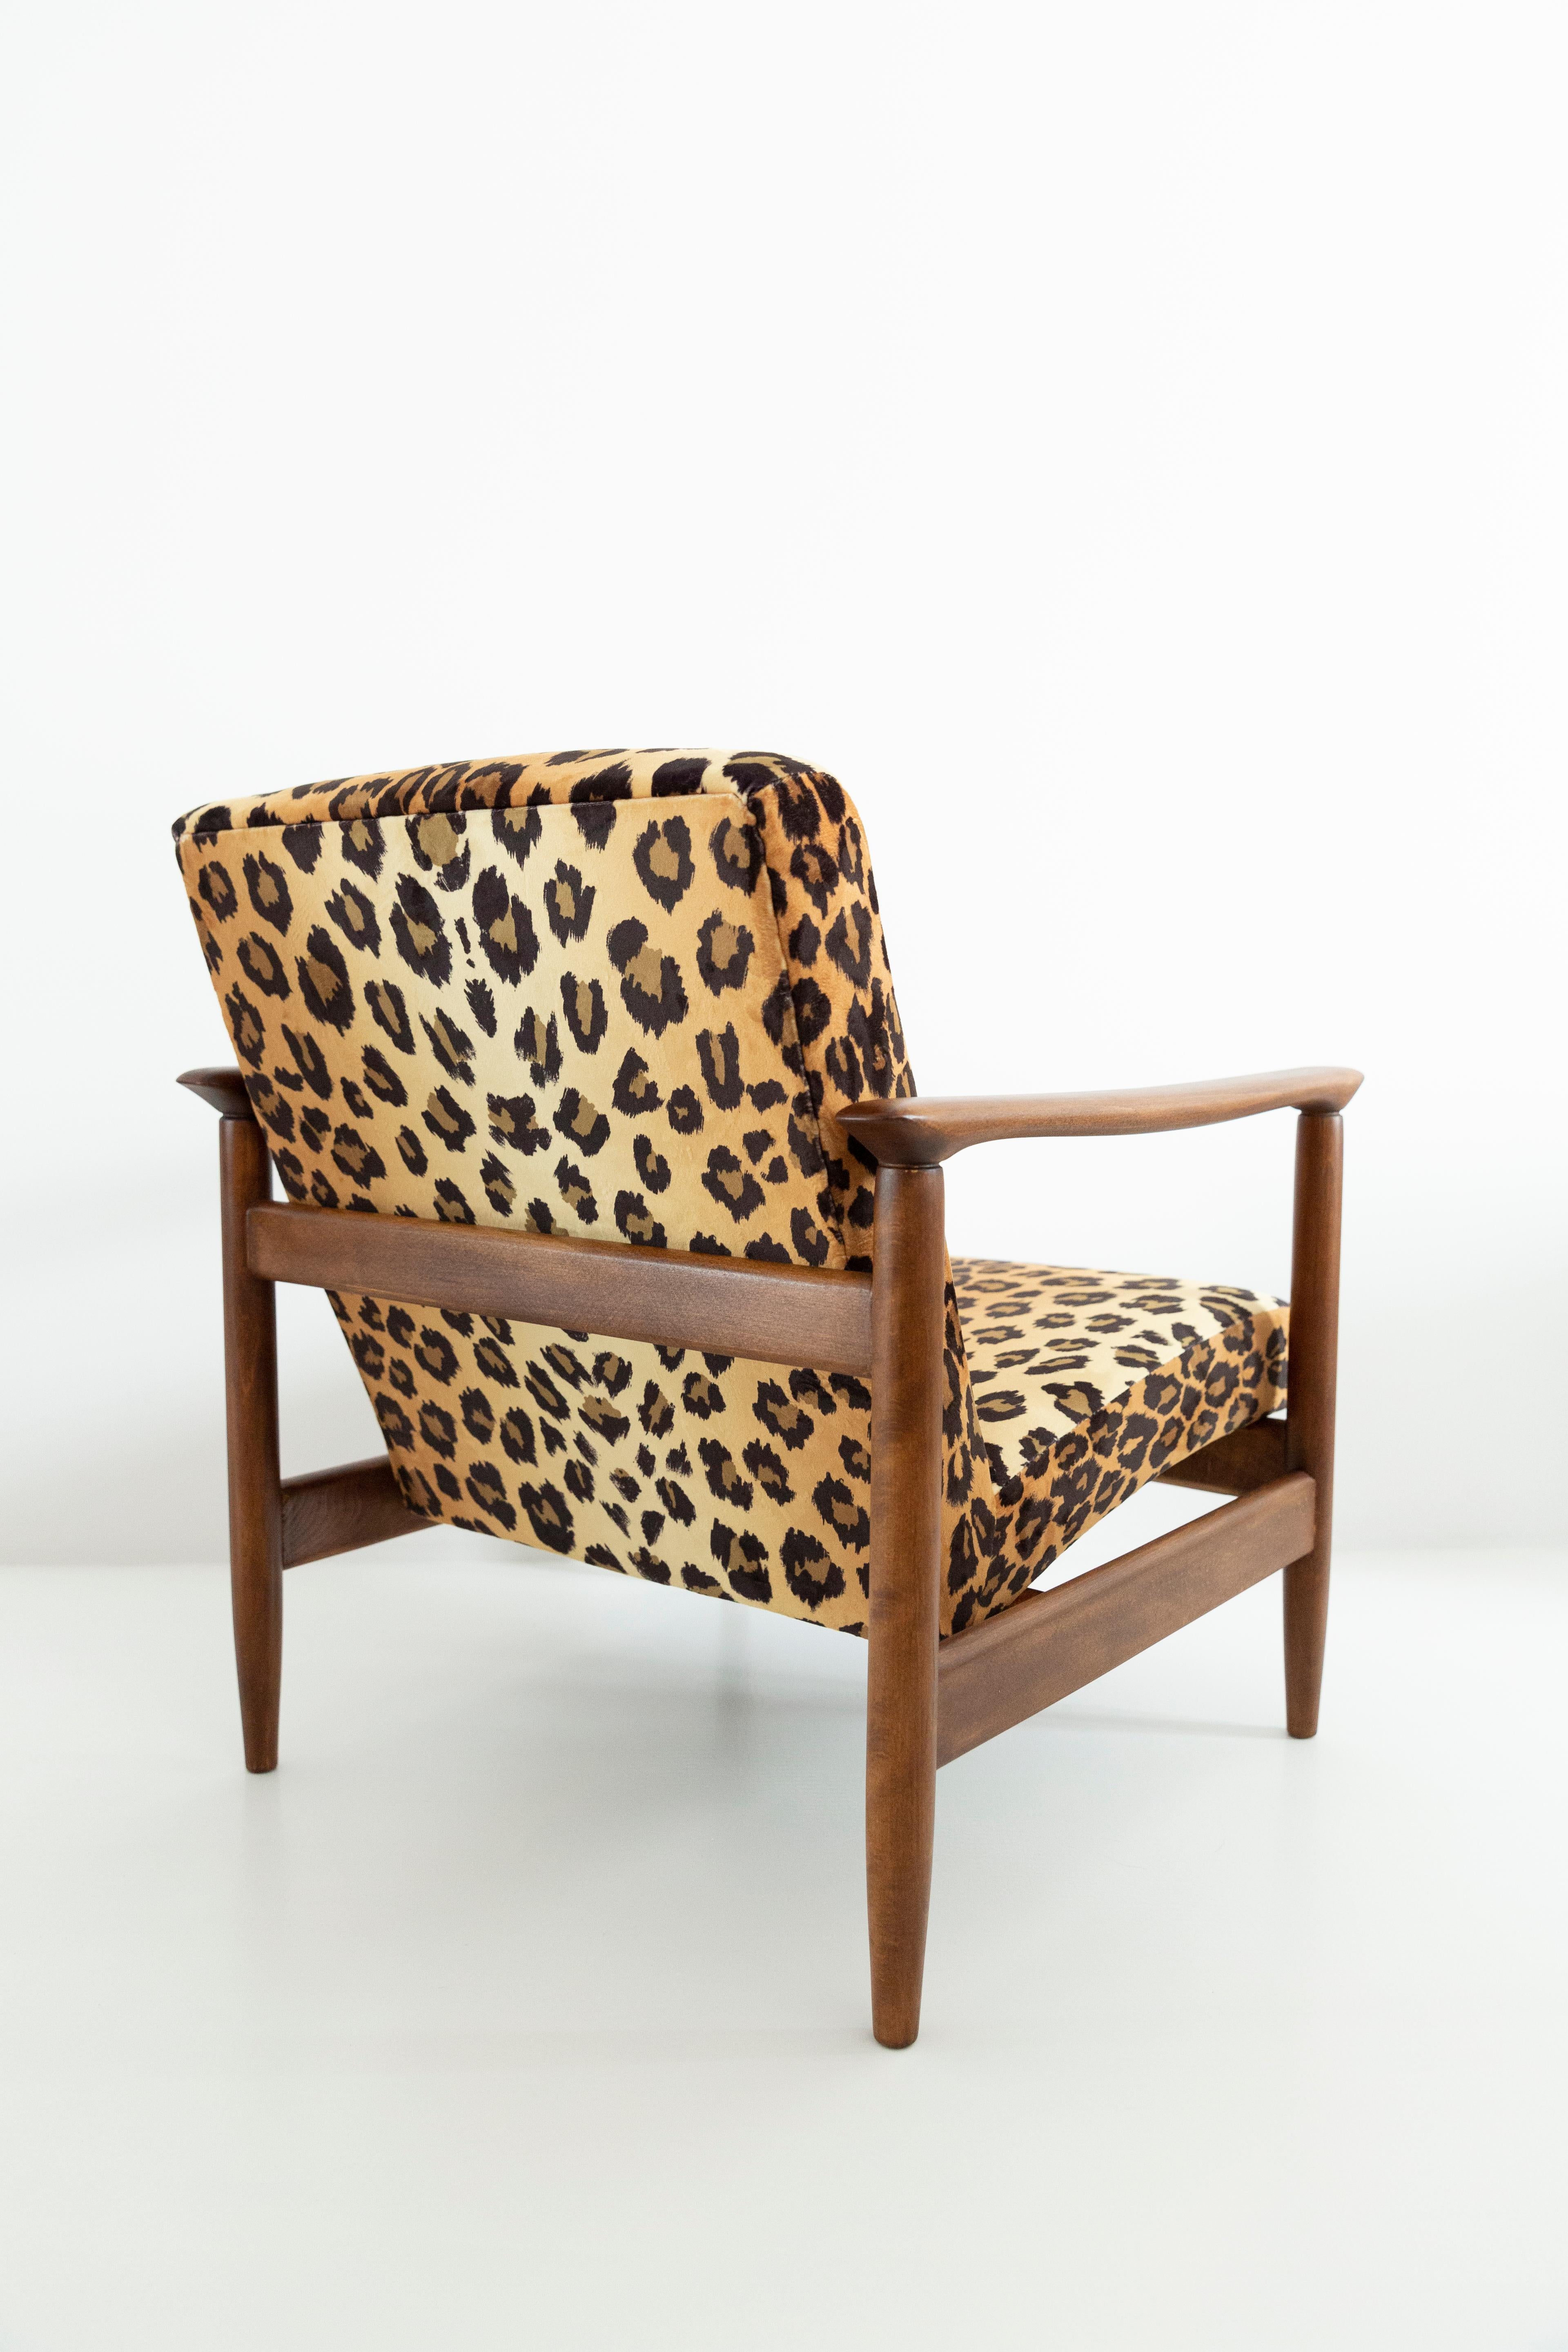 20th Century Leopard Print Velvet Armchair, Light Wood, Edmund Homa, GFM-142, 1960s, Poland For Sale